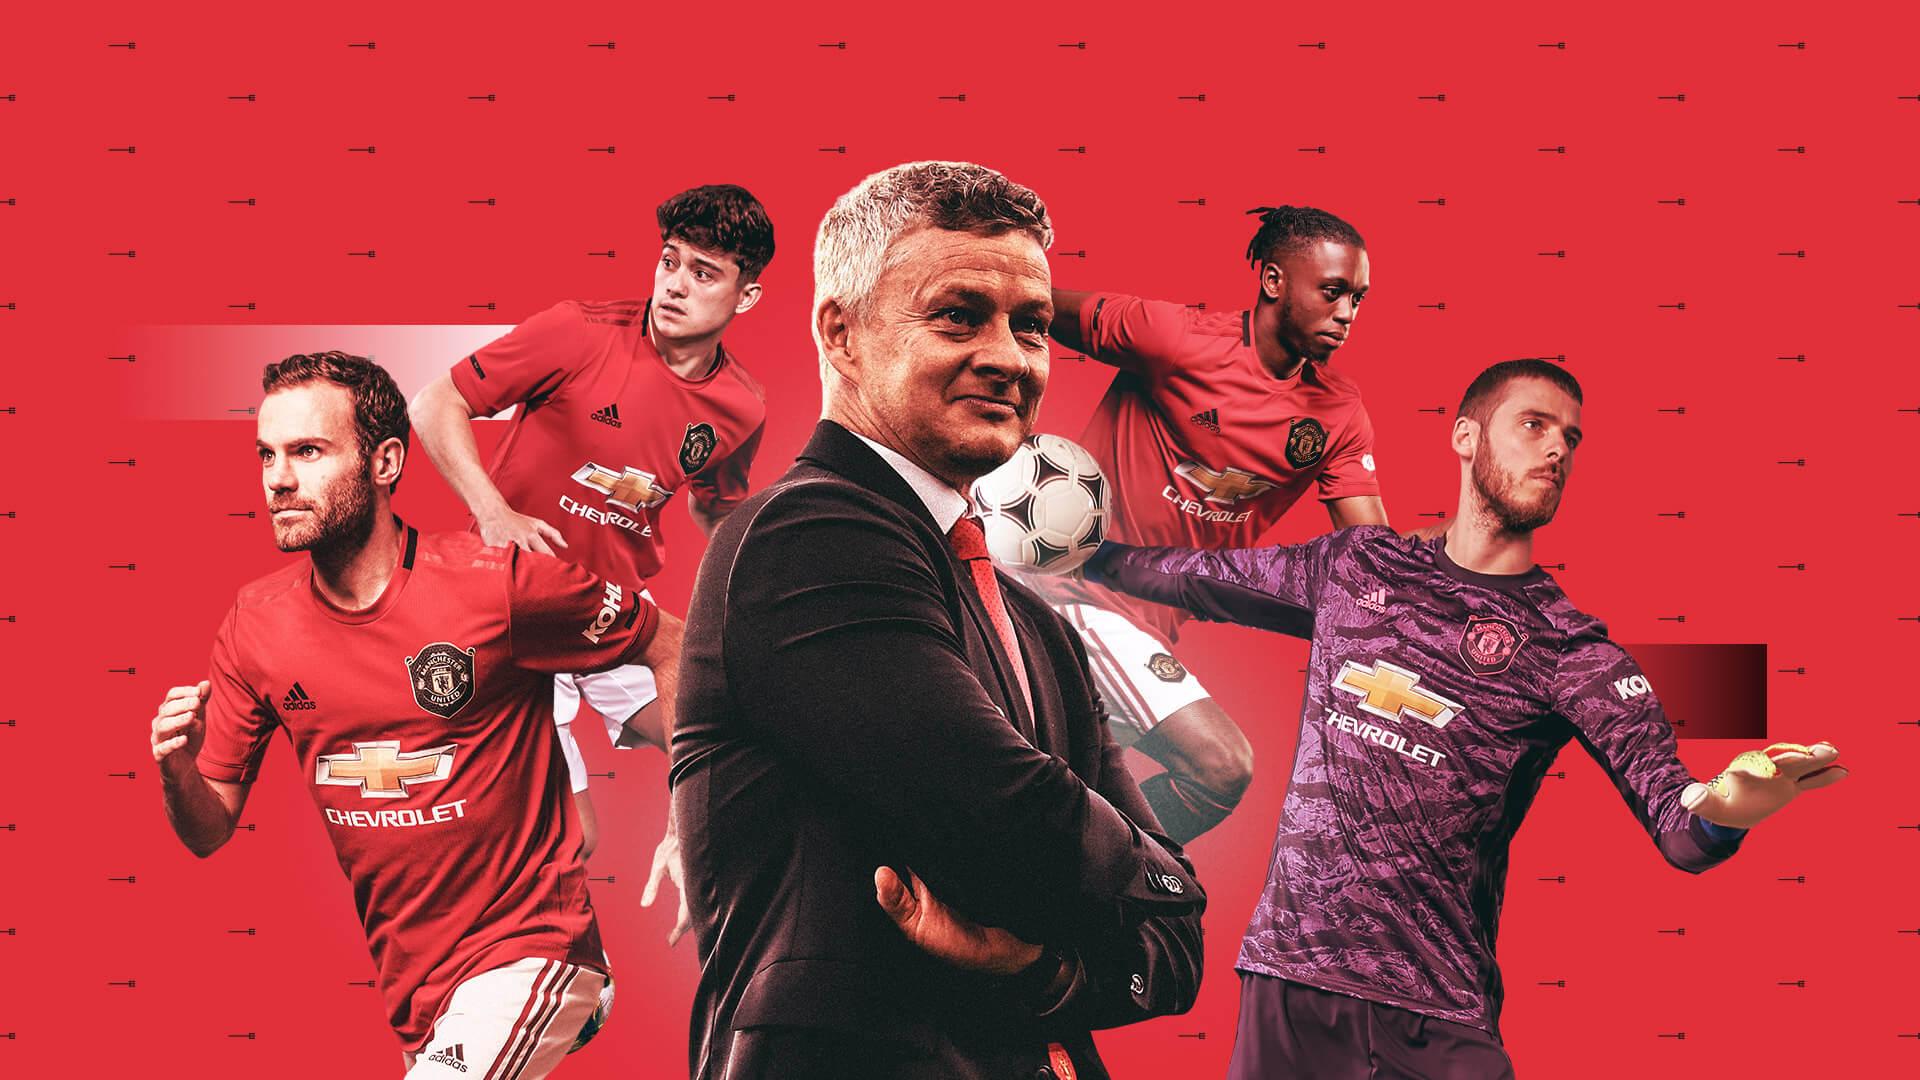 [42+] Manchester United 2021 Wallpapers - WallpaperSafari